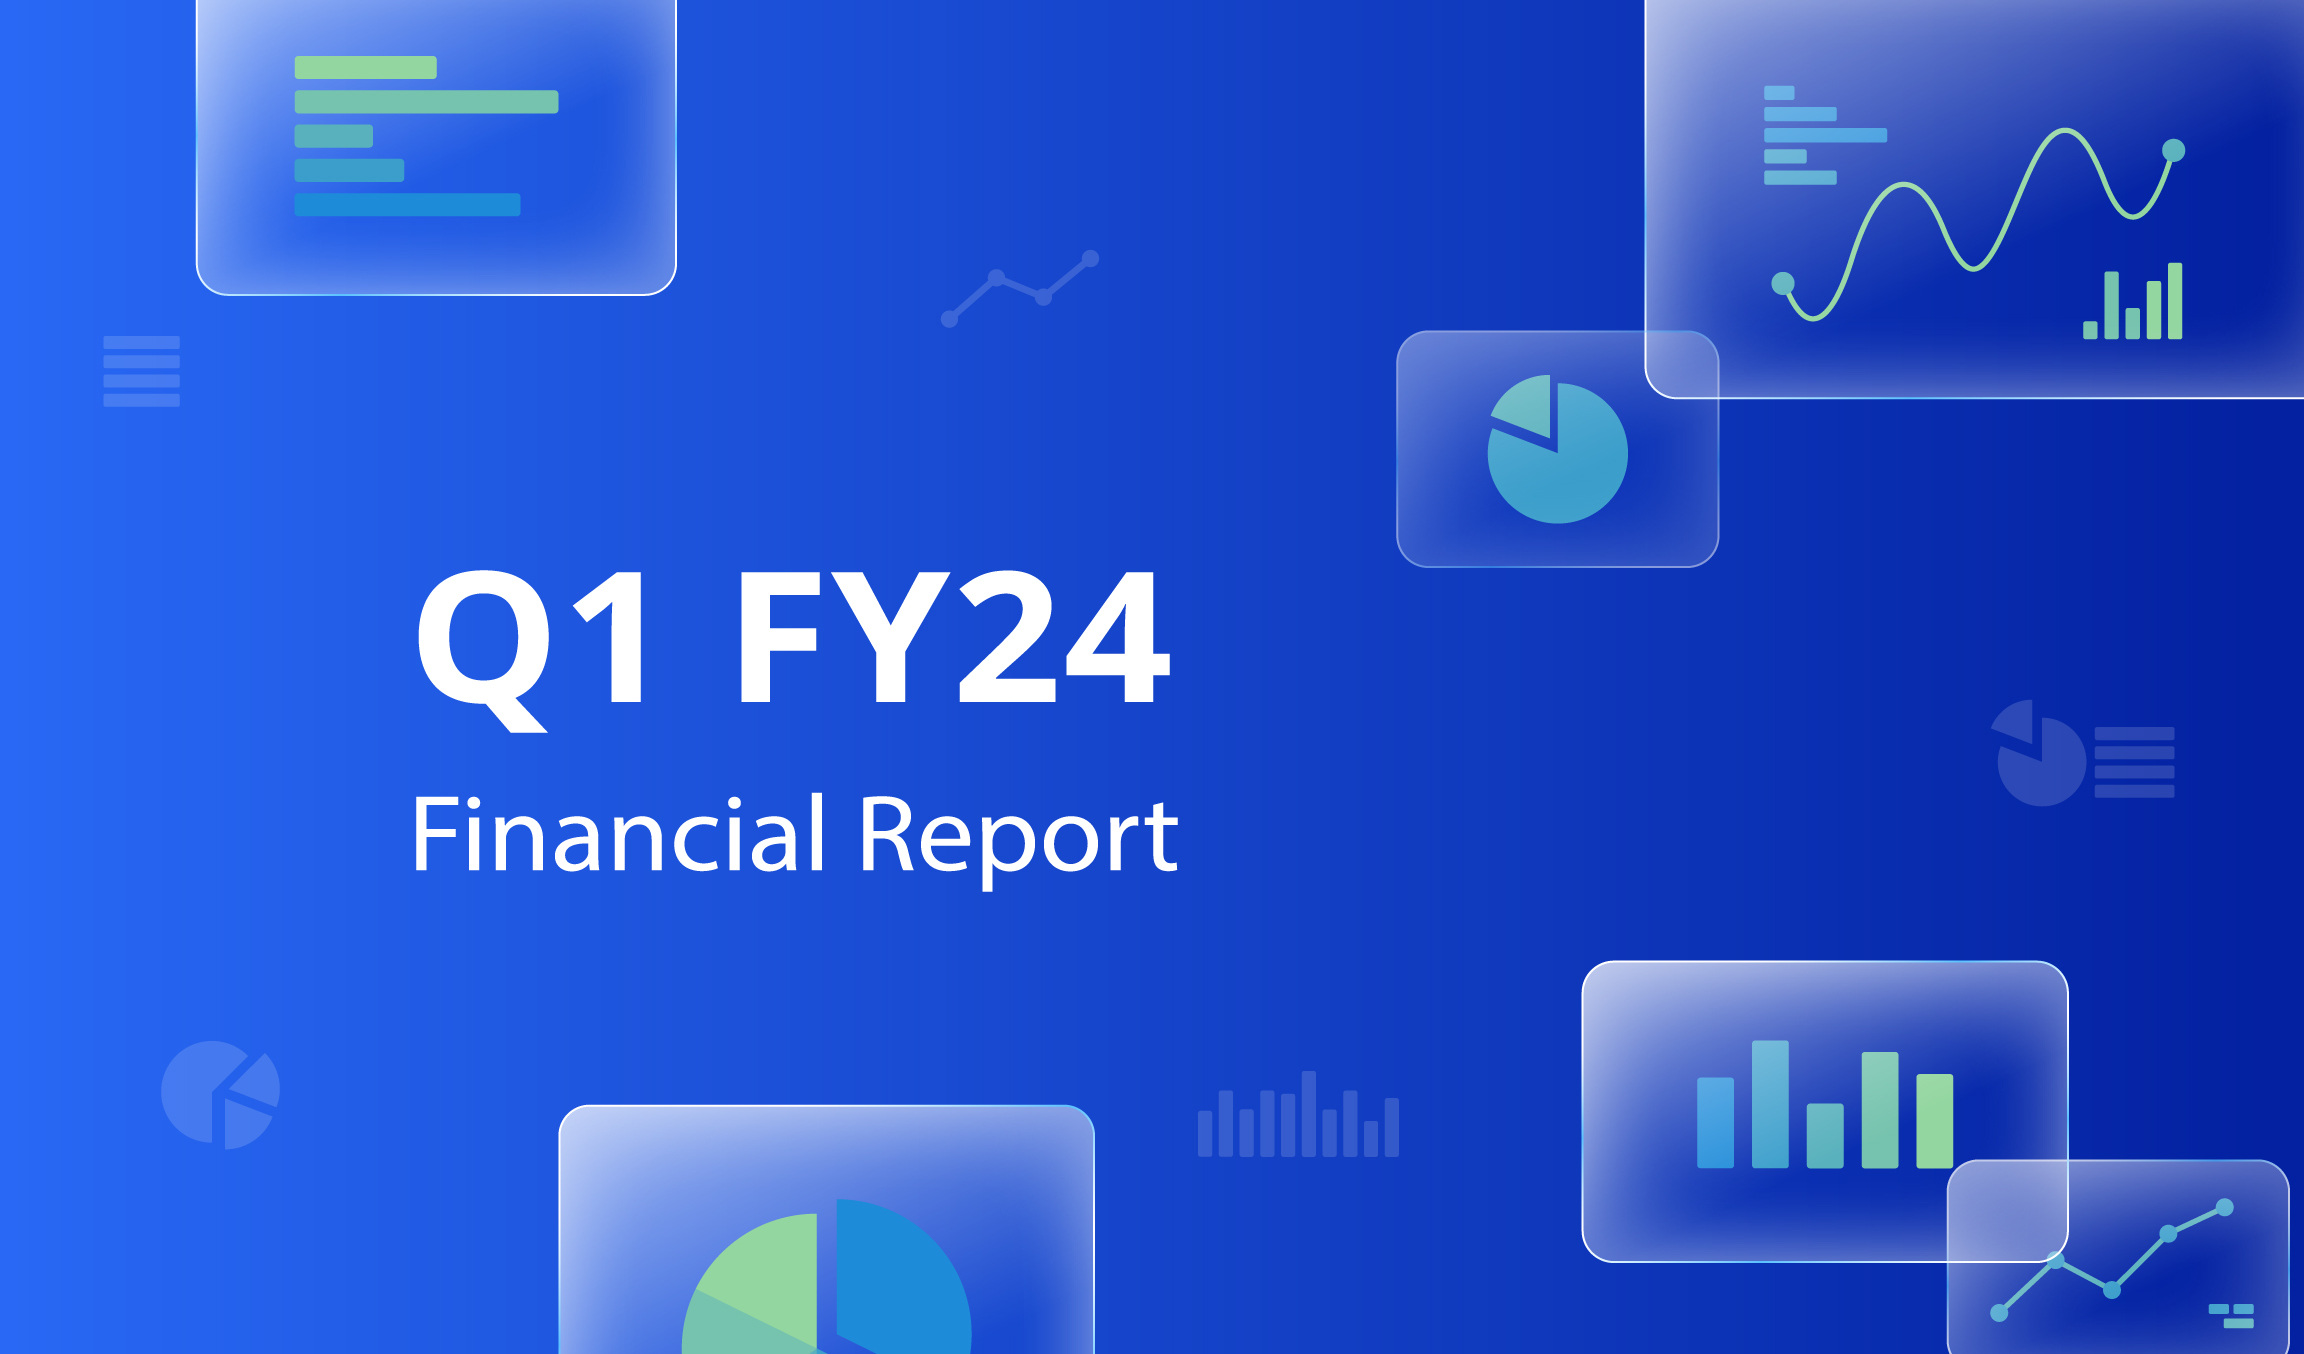 PR_FY24 Q1 Finanical report_banner